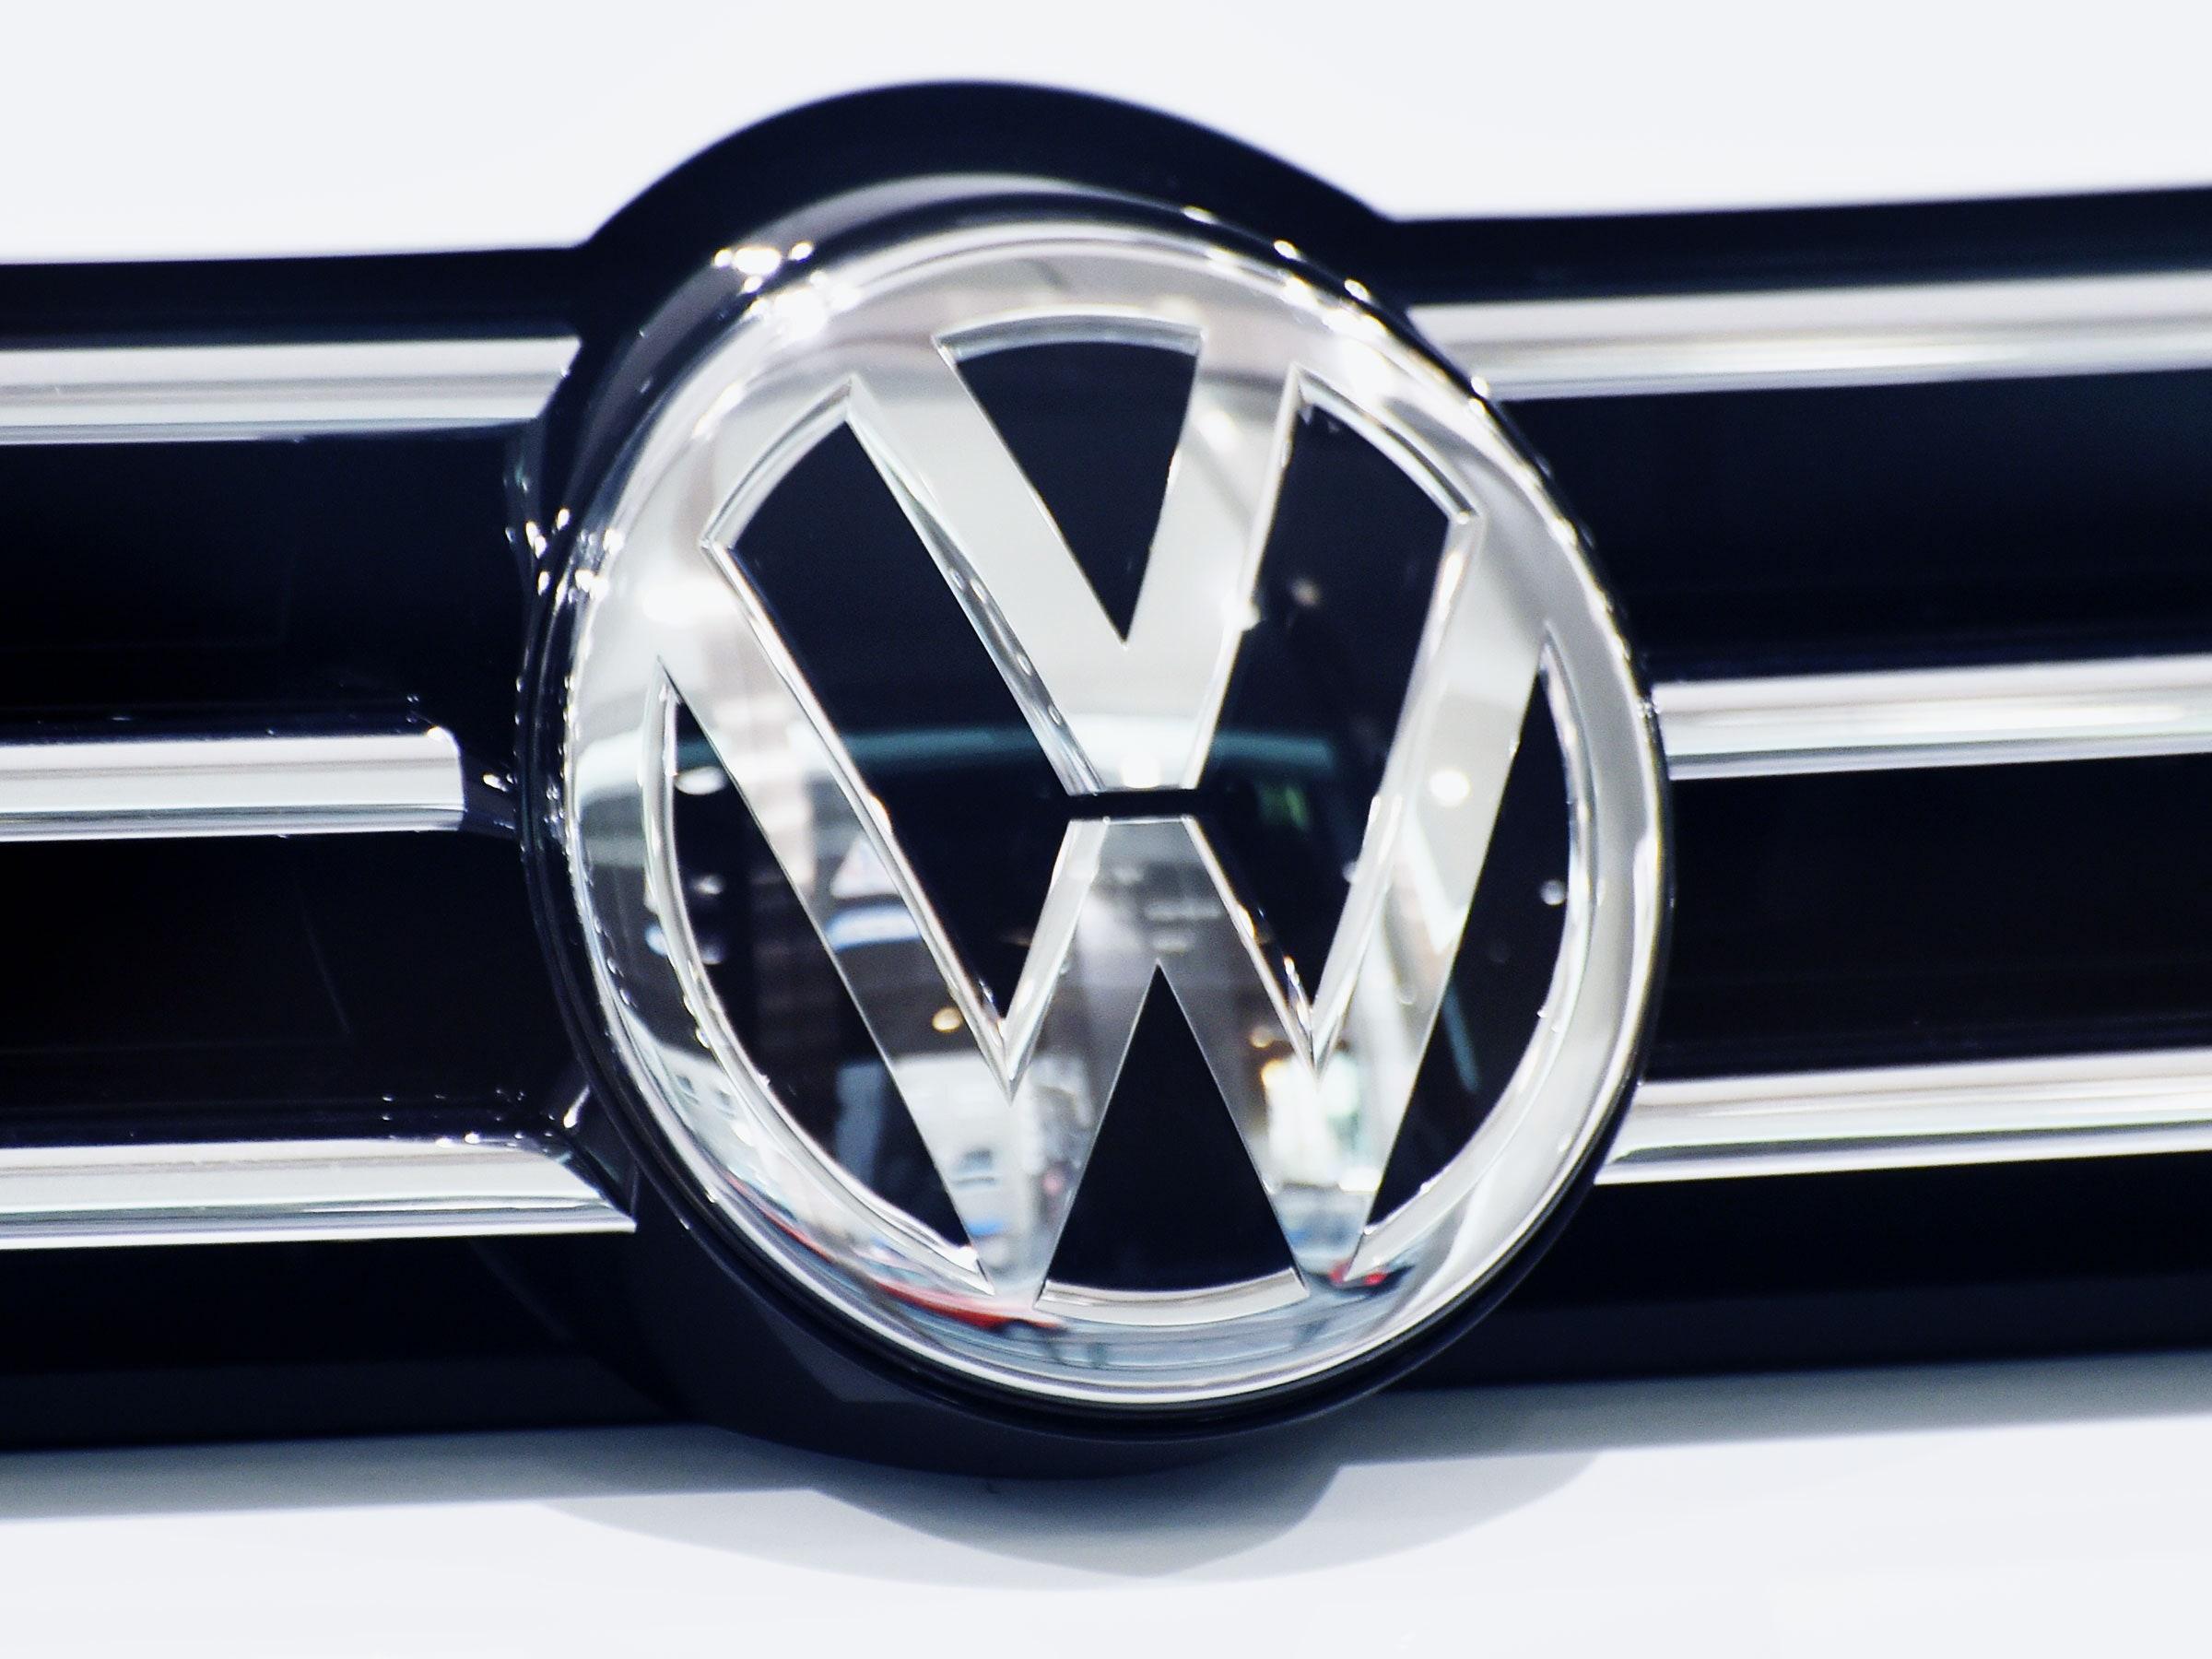 Volkswagen Remote Control Car: Potential drawbacks to consider